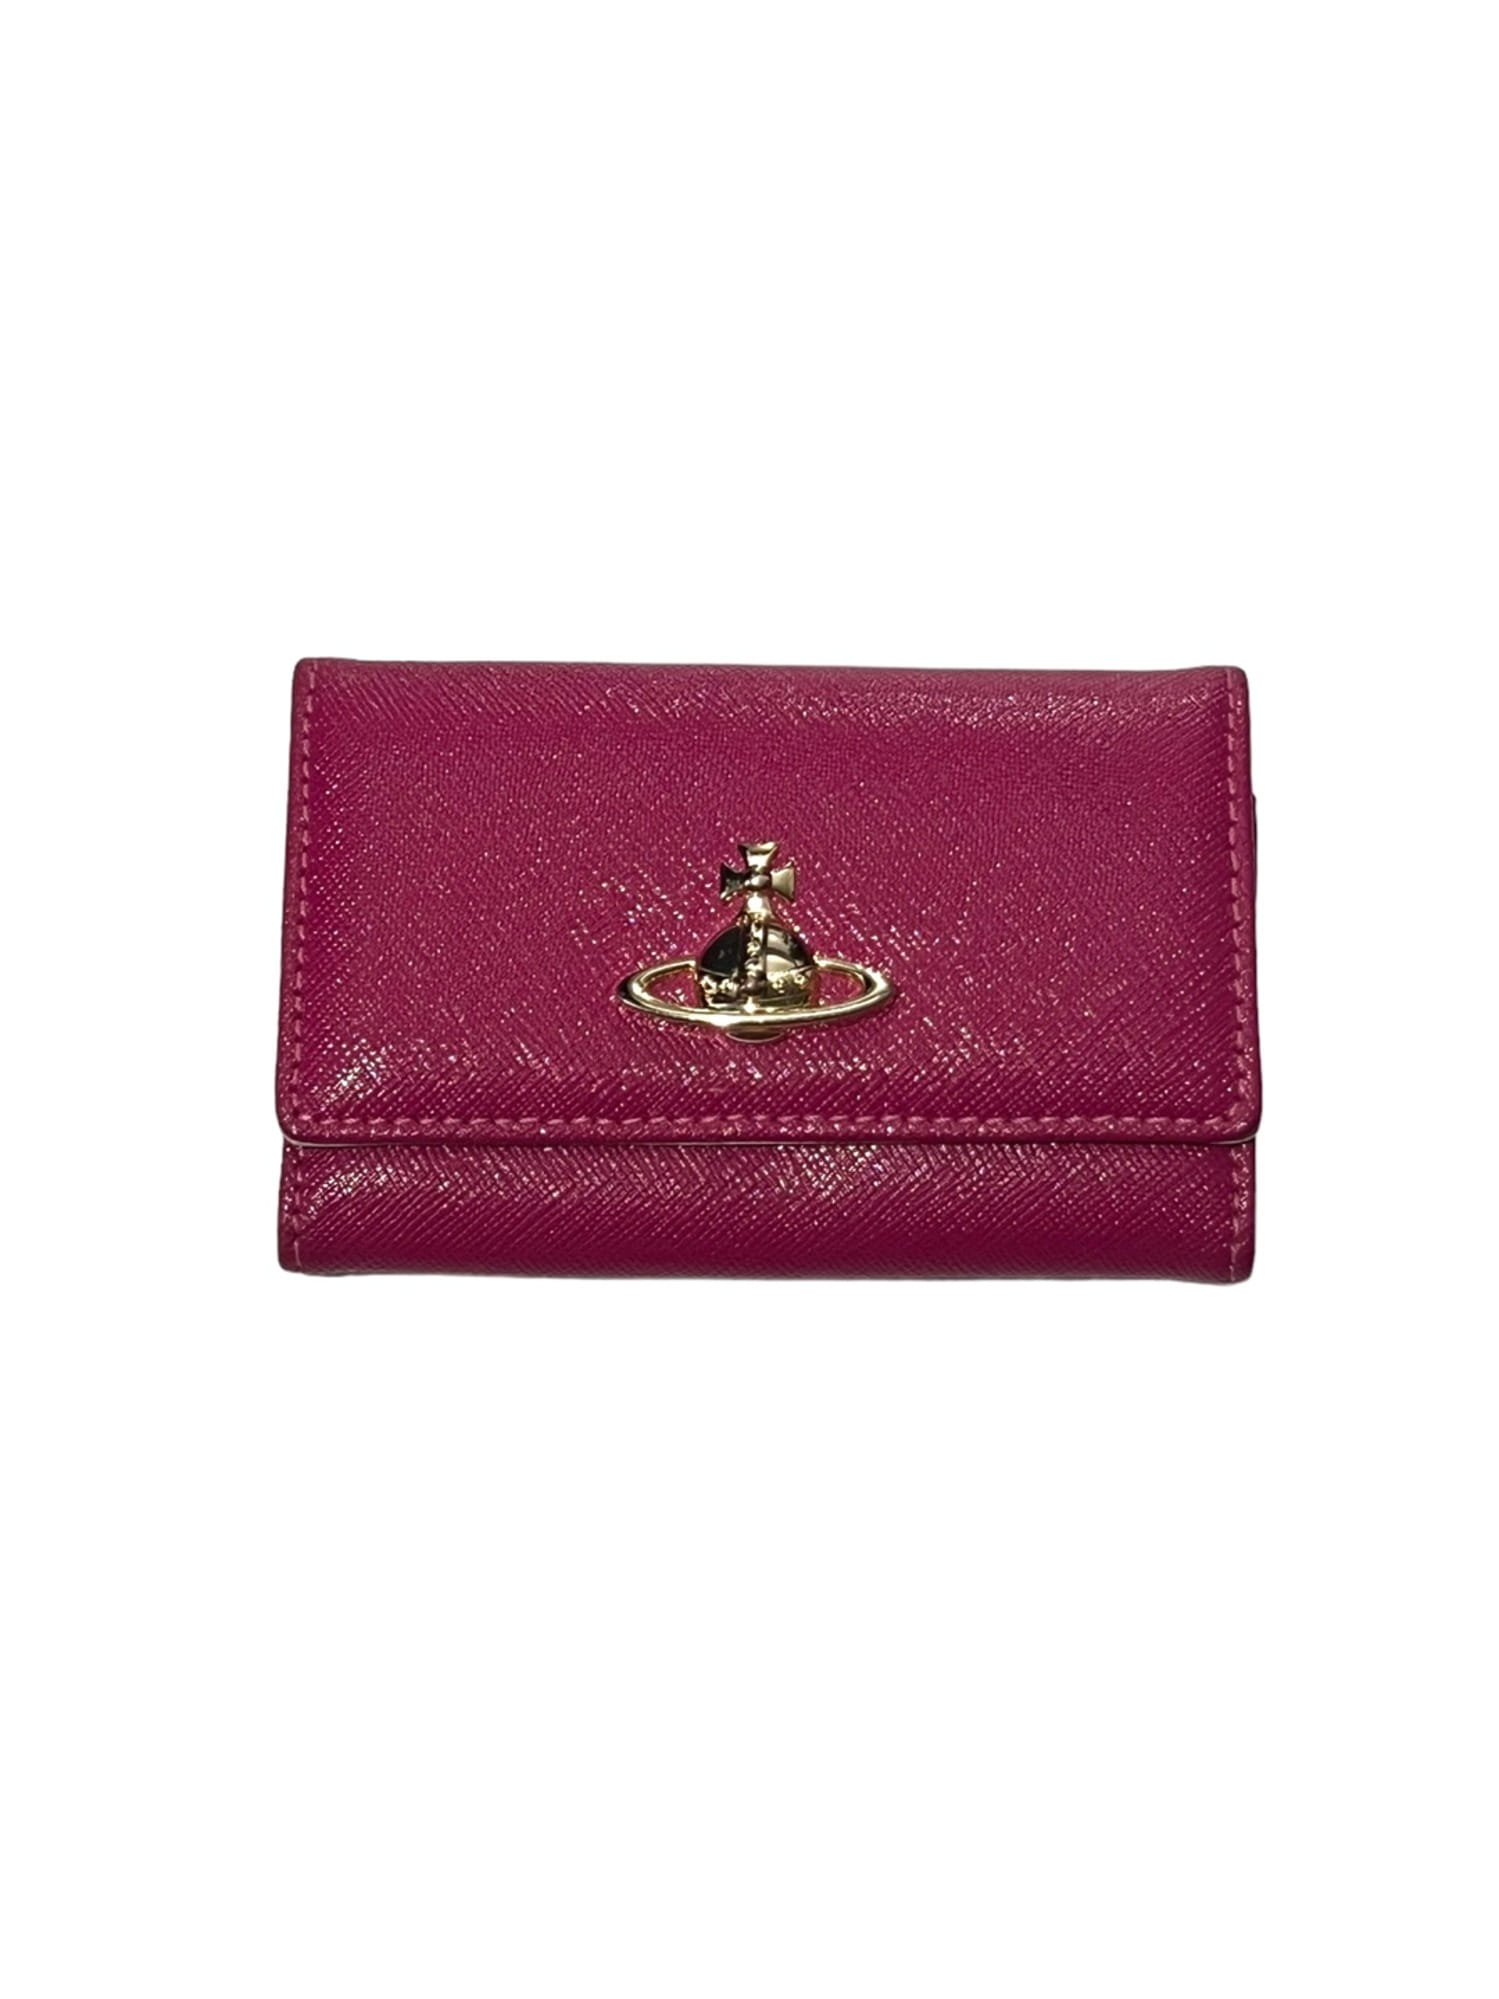 Vivienne Wsetwood Pink Leather Key Case Wallet